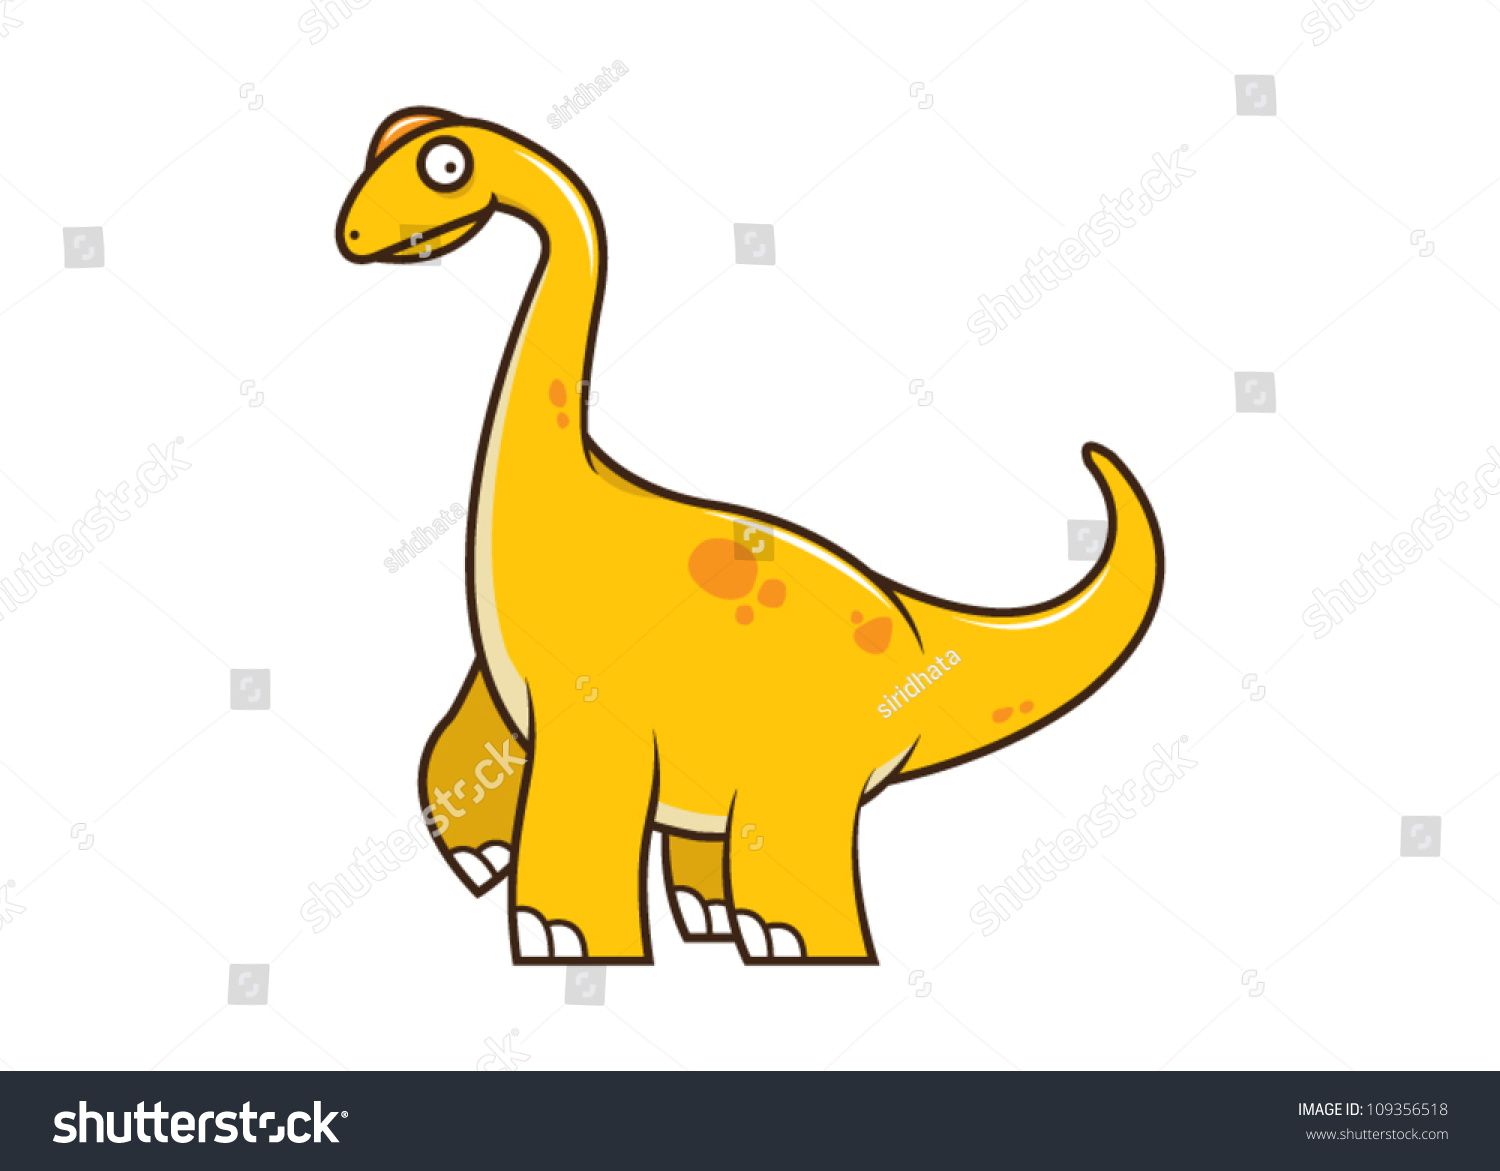 Cute Brachiosaurus Vector - 109356518 : Shutterstock